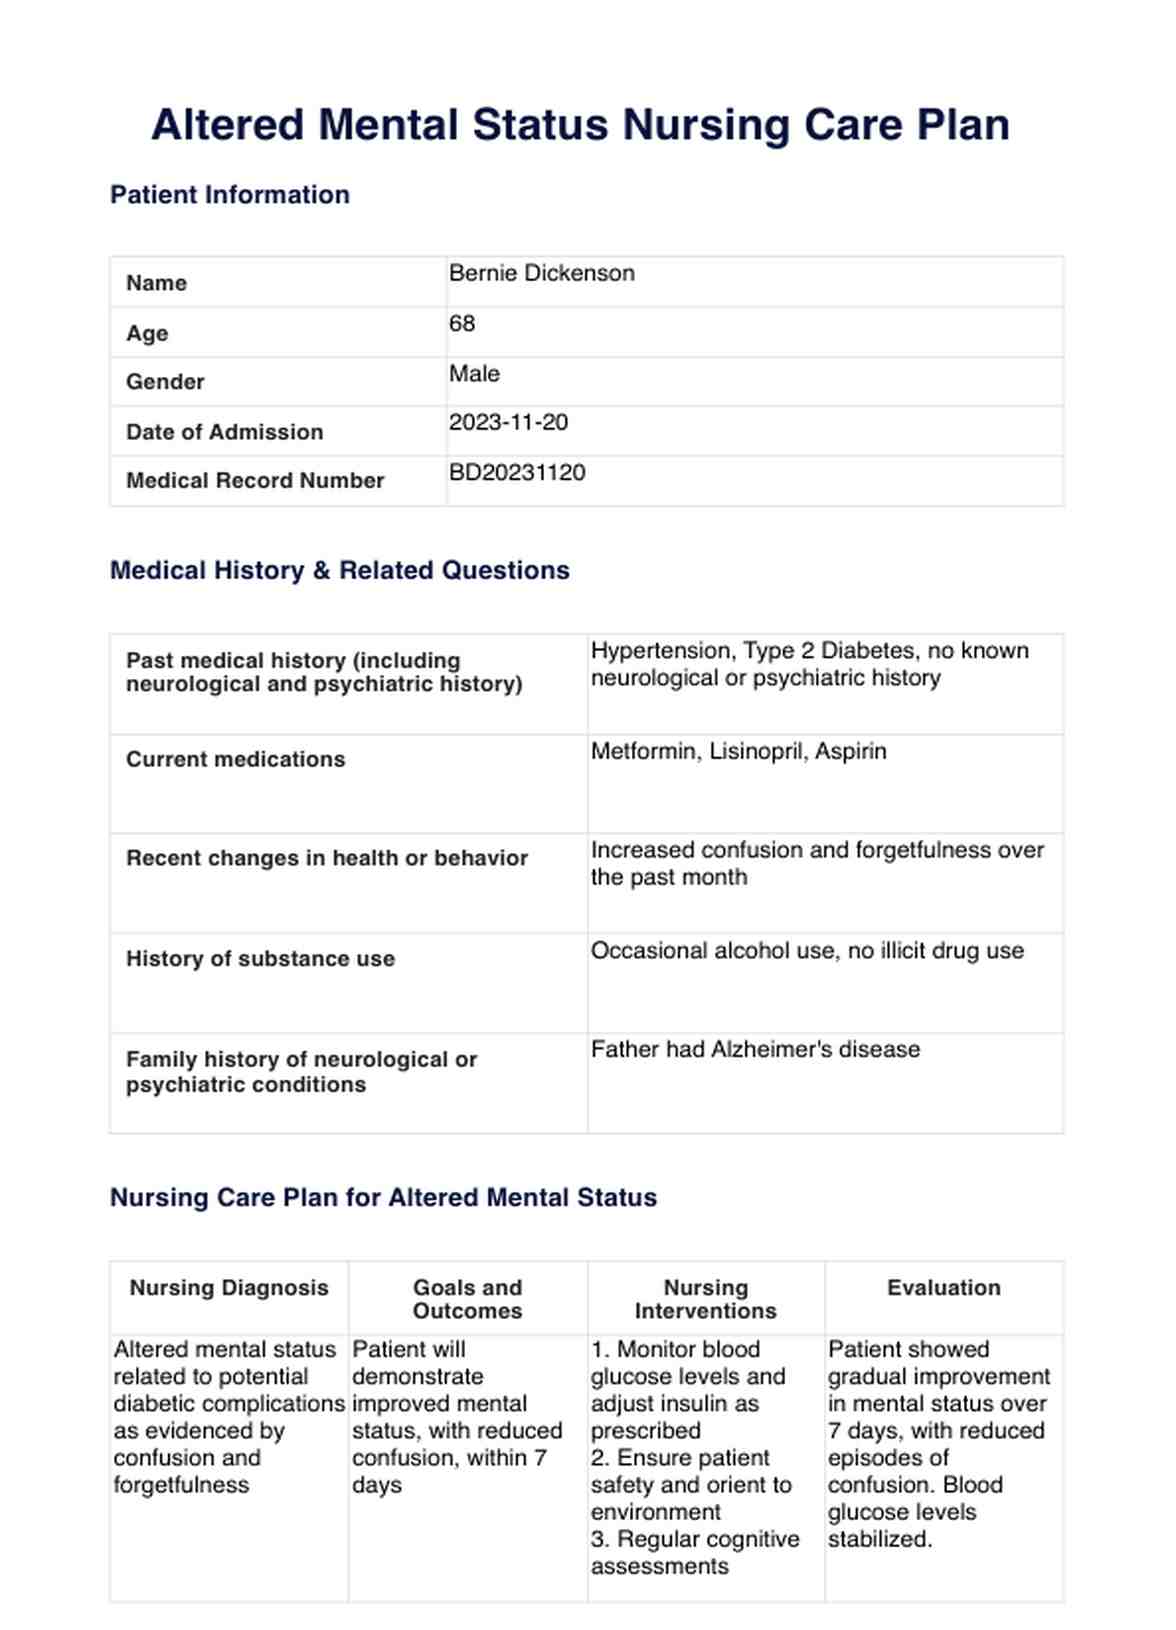 Altered Mental Status Nursing Care Plan PDF Example